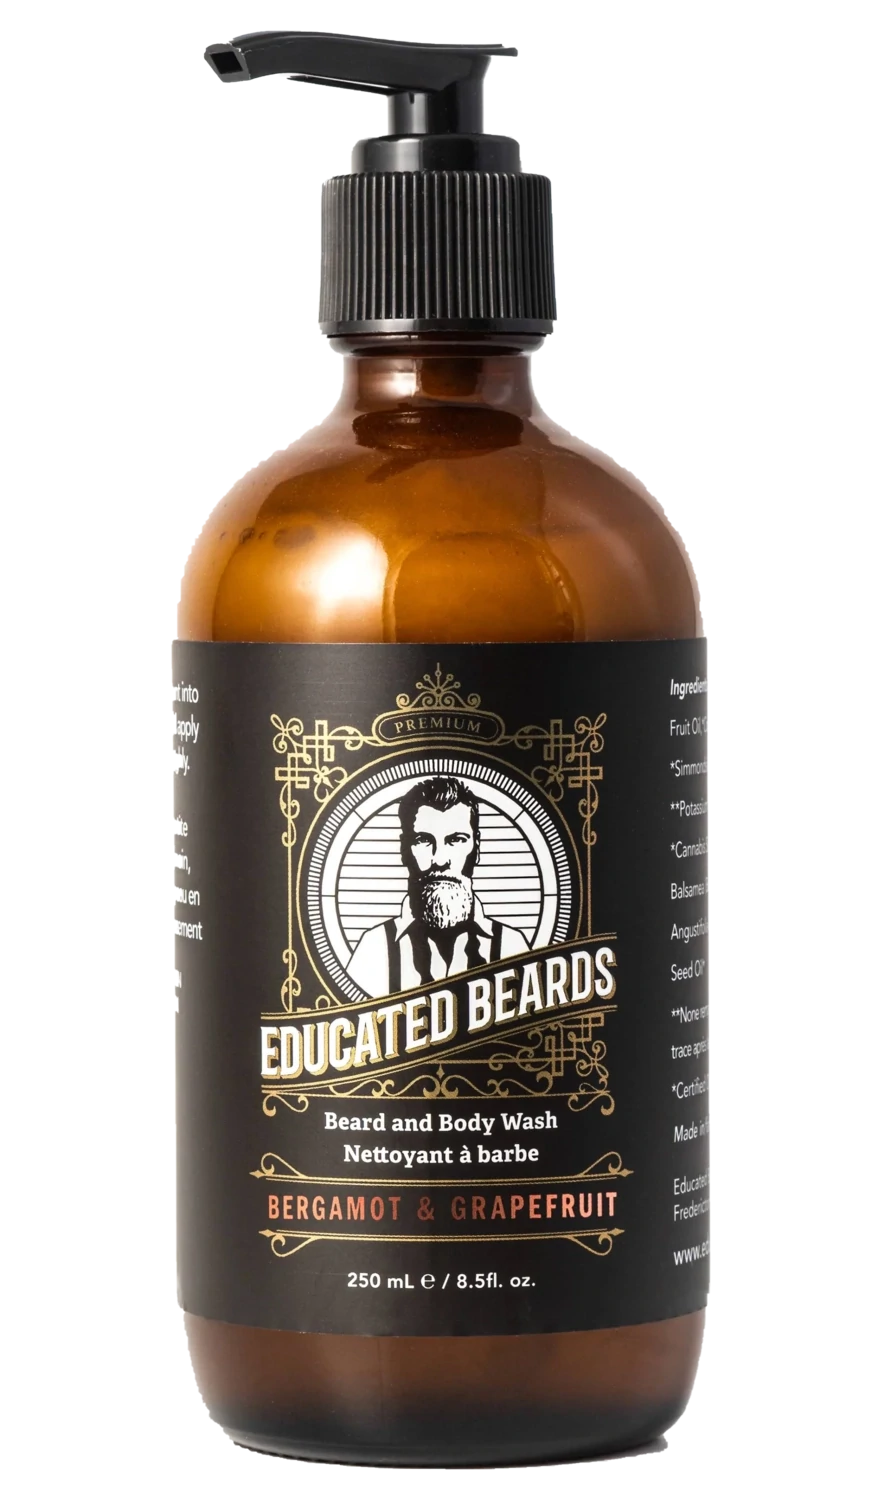 Bergamot and Grapefruit Beard and Body Wash- Educated Beards